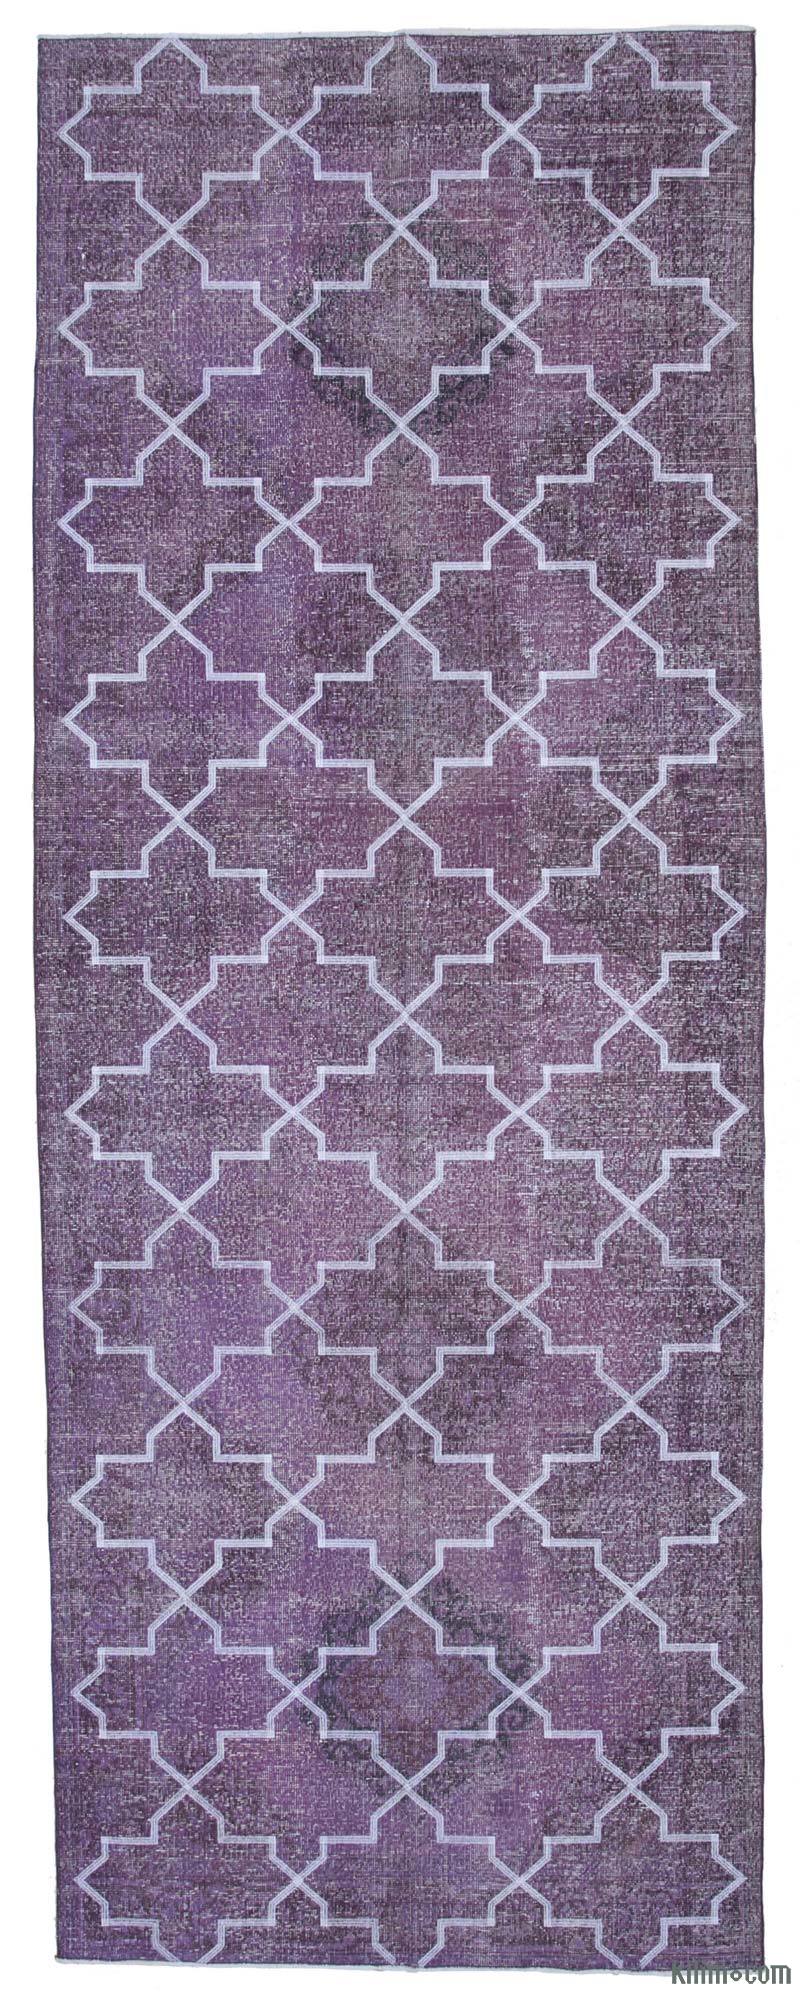 Púrpura Alfombra Turca bordada sobre teñida vintage - 148 cm x 395 cm - K0038713